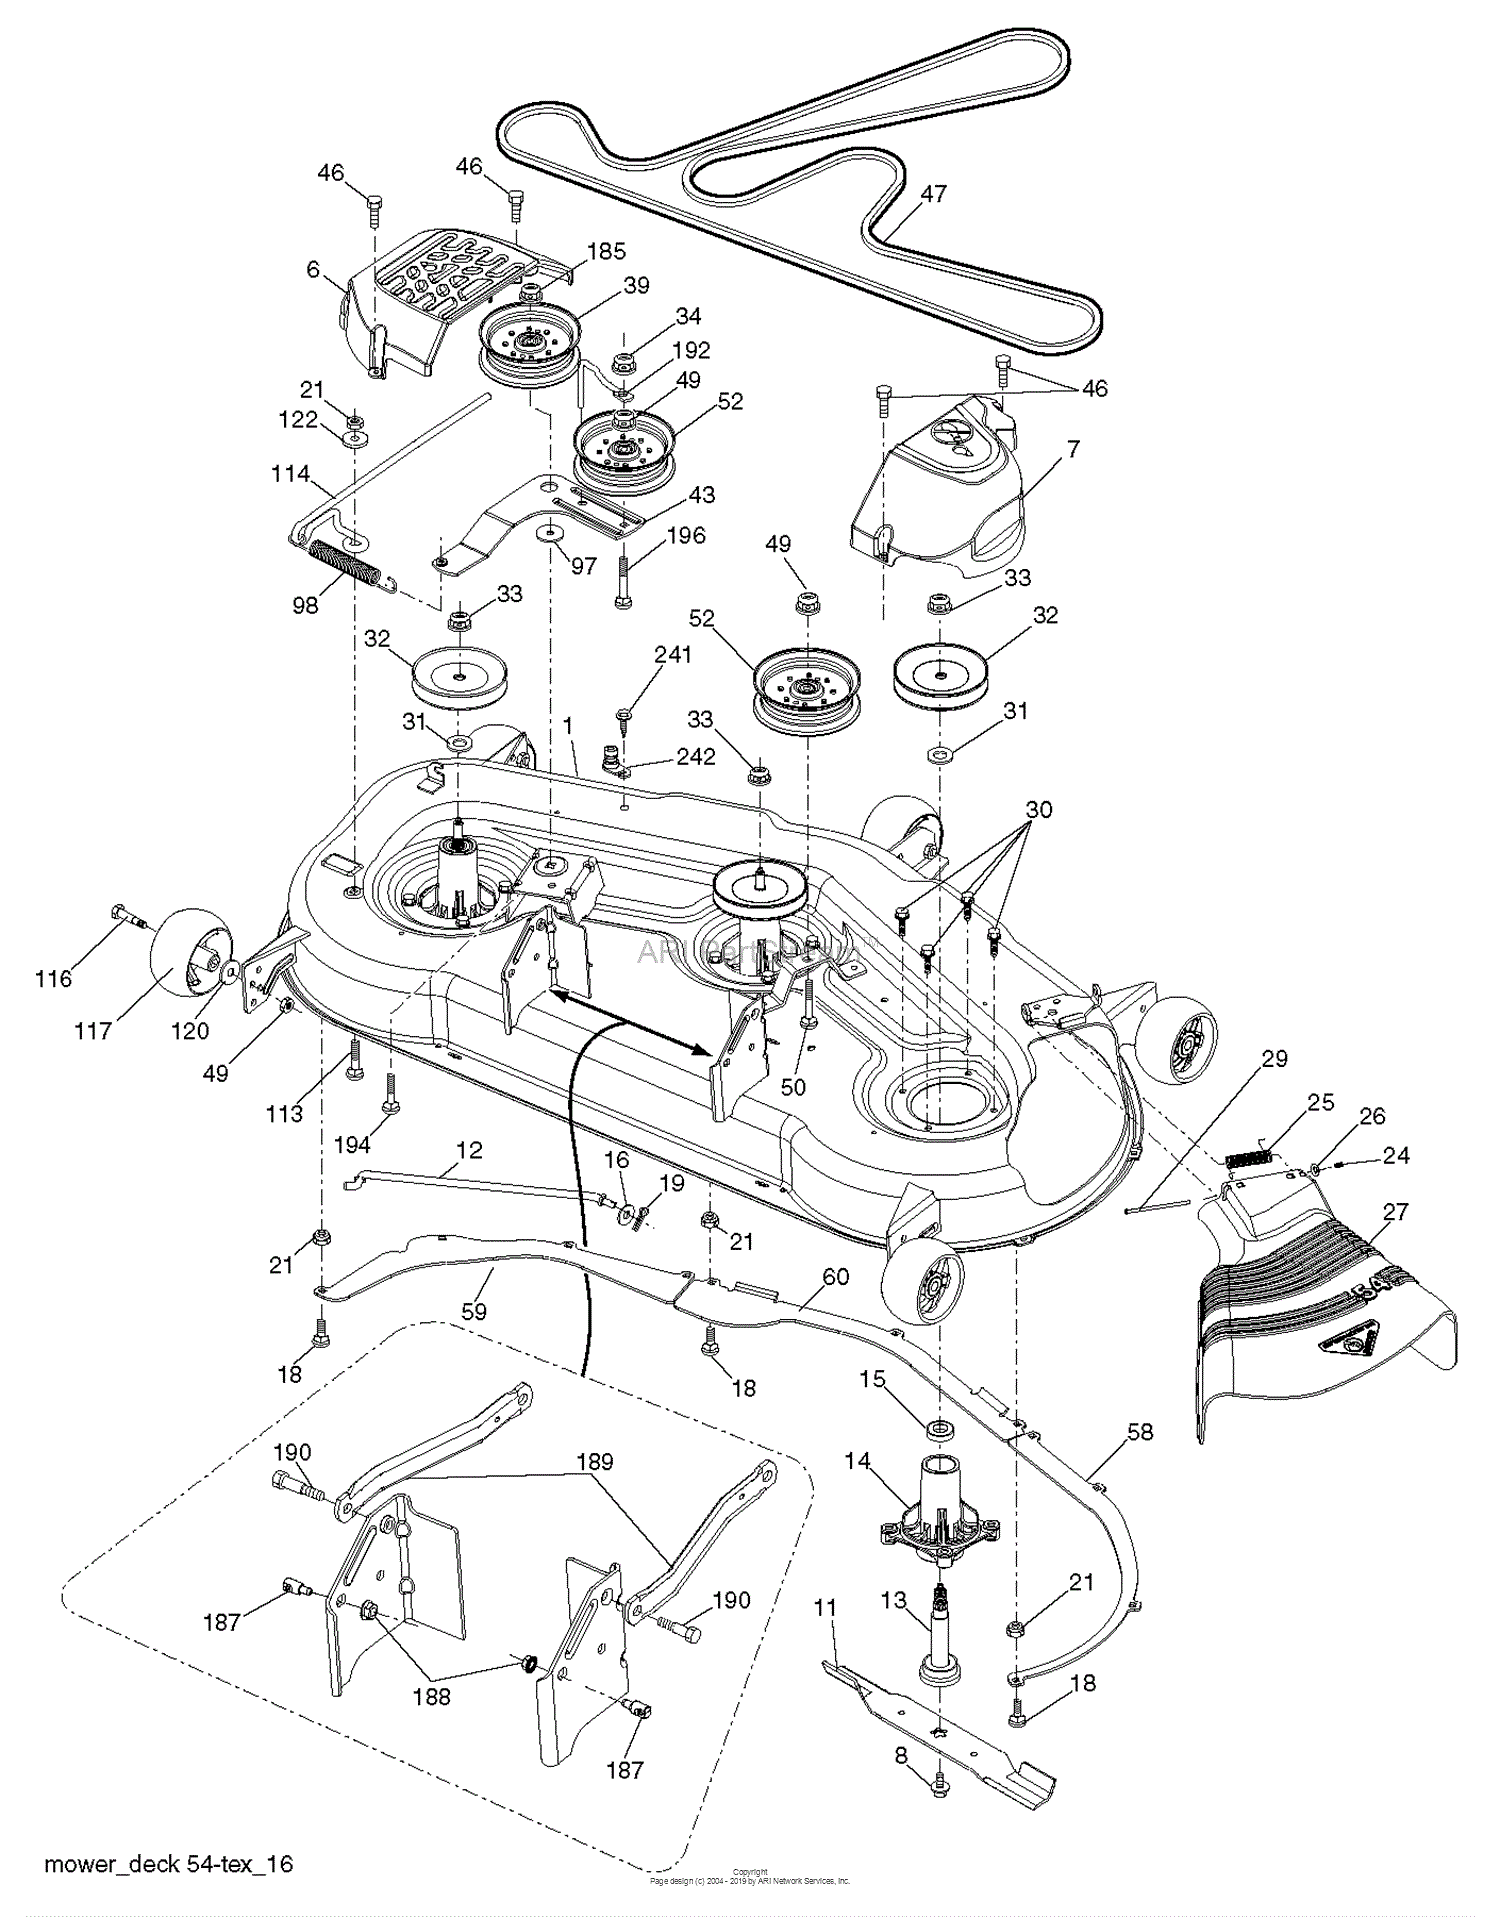 Husqvarna Mower Deck Parts Diagram